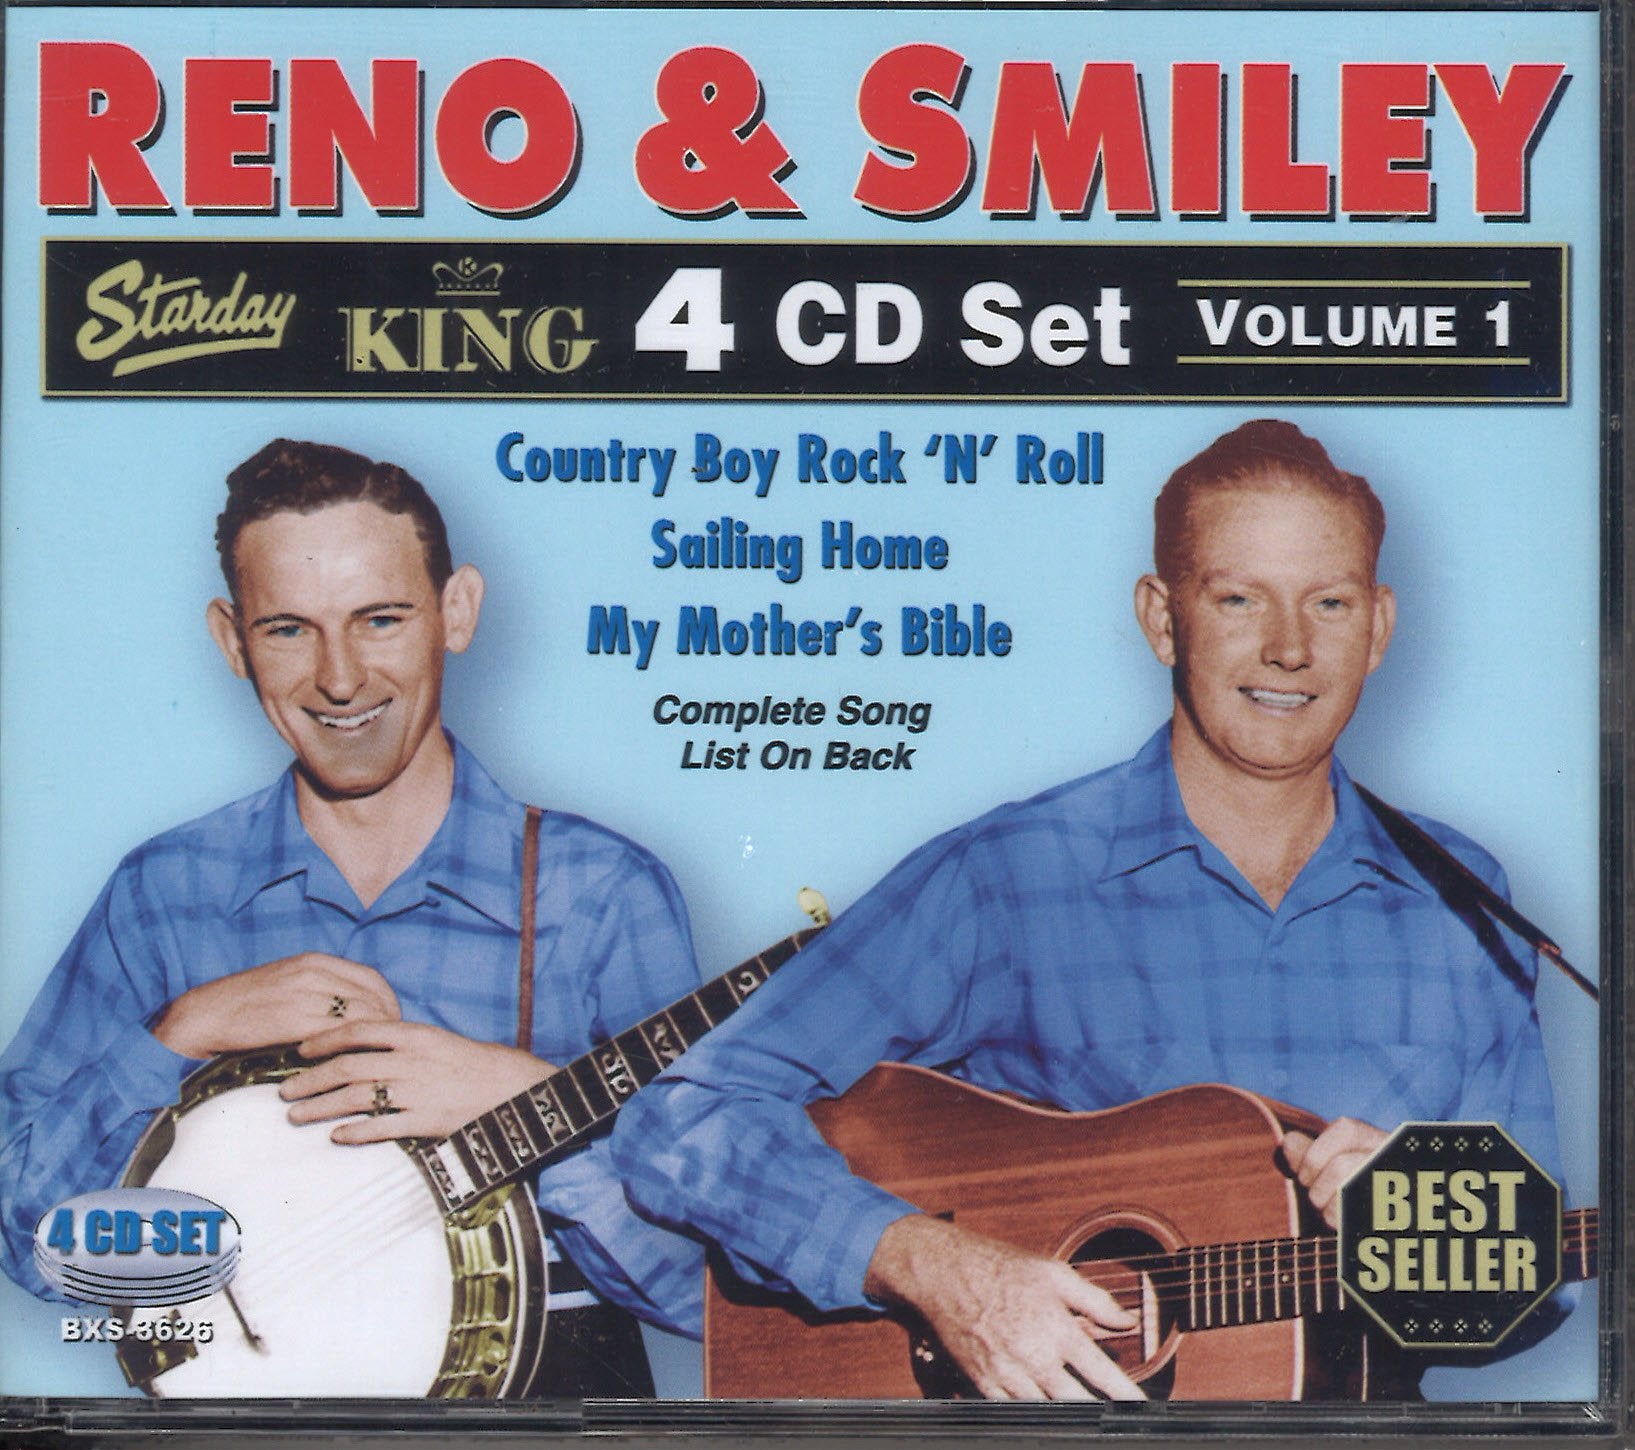 Reno & Smiley Volume 1: 4 CD Set